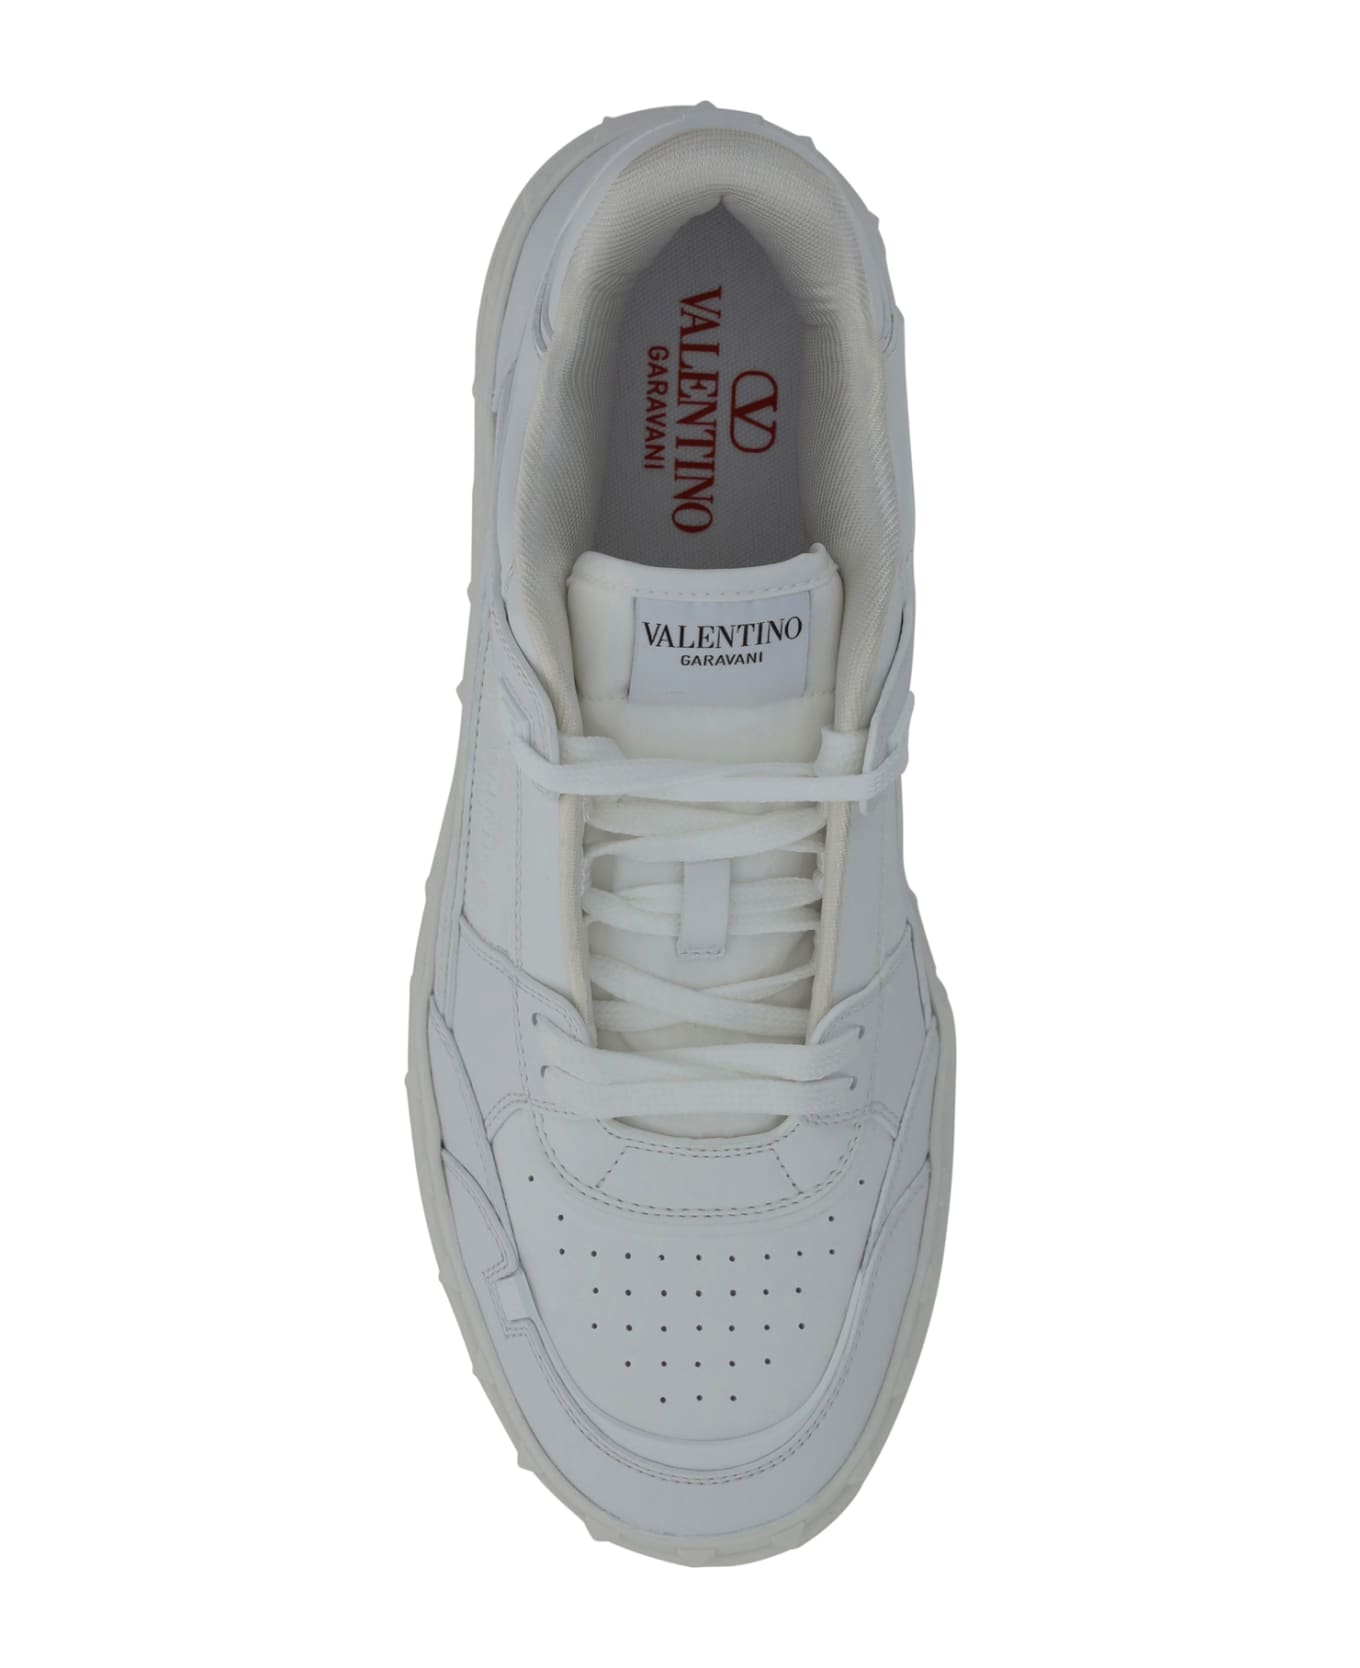 Valentino Garavani Freedots Sneakers - Bianco